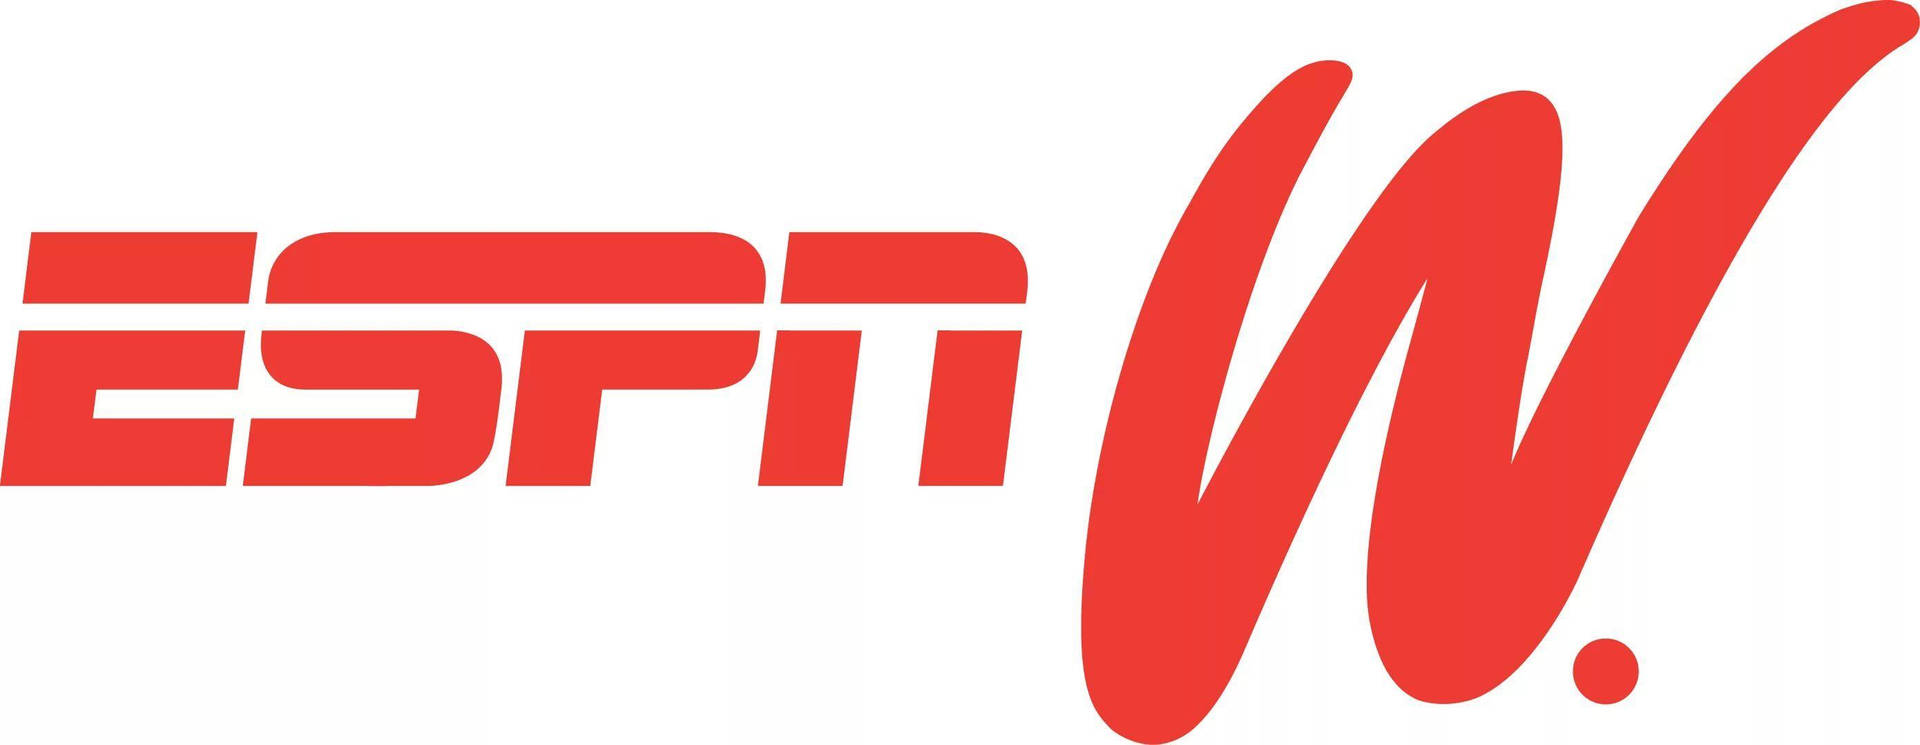 ESPN Women Logo Wallpaper